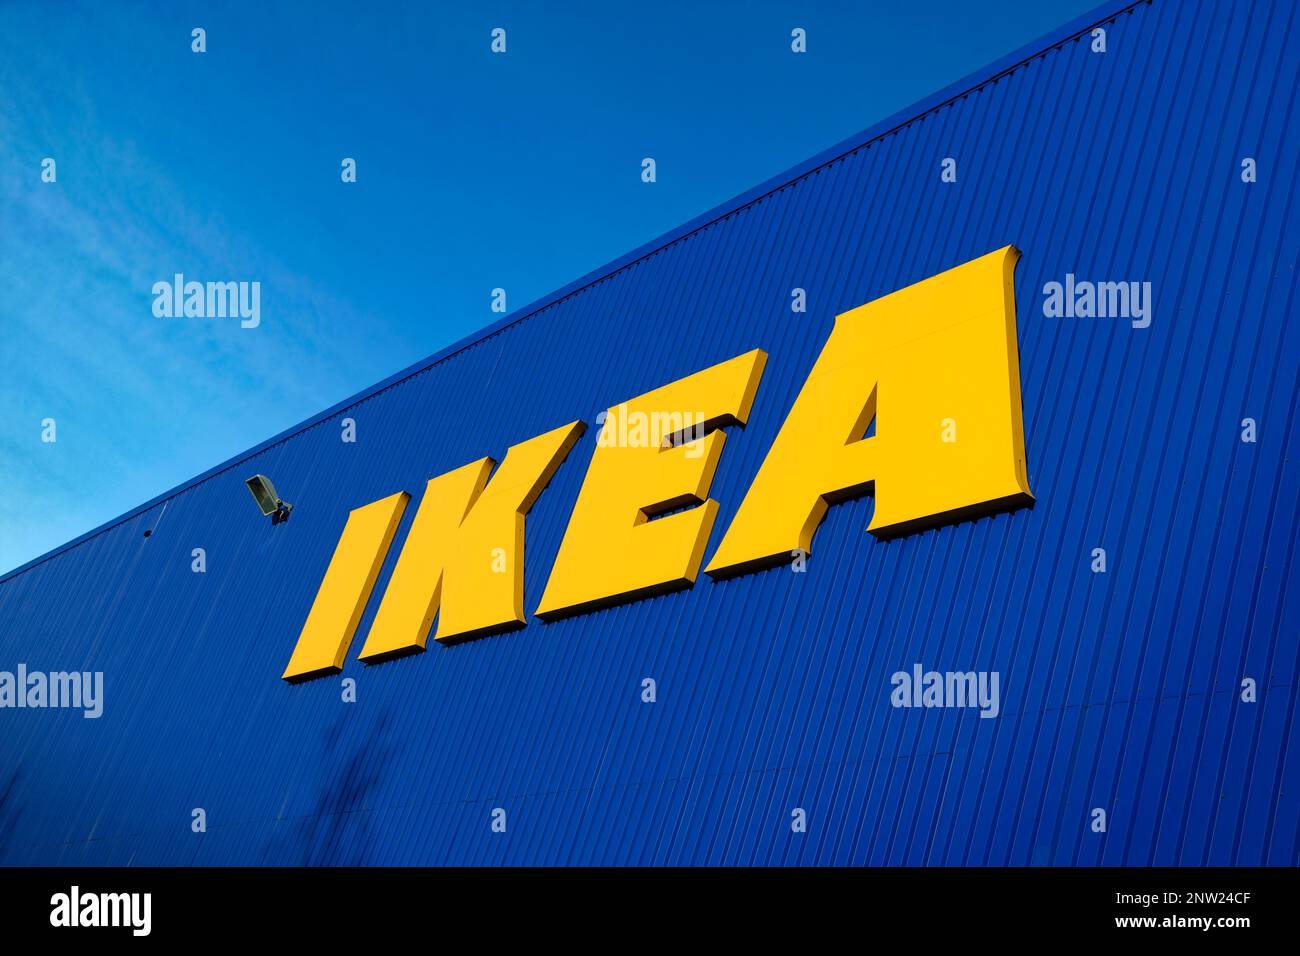 Ikea store. Stock Photo